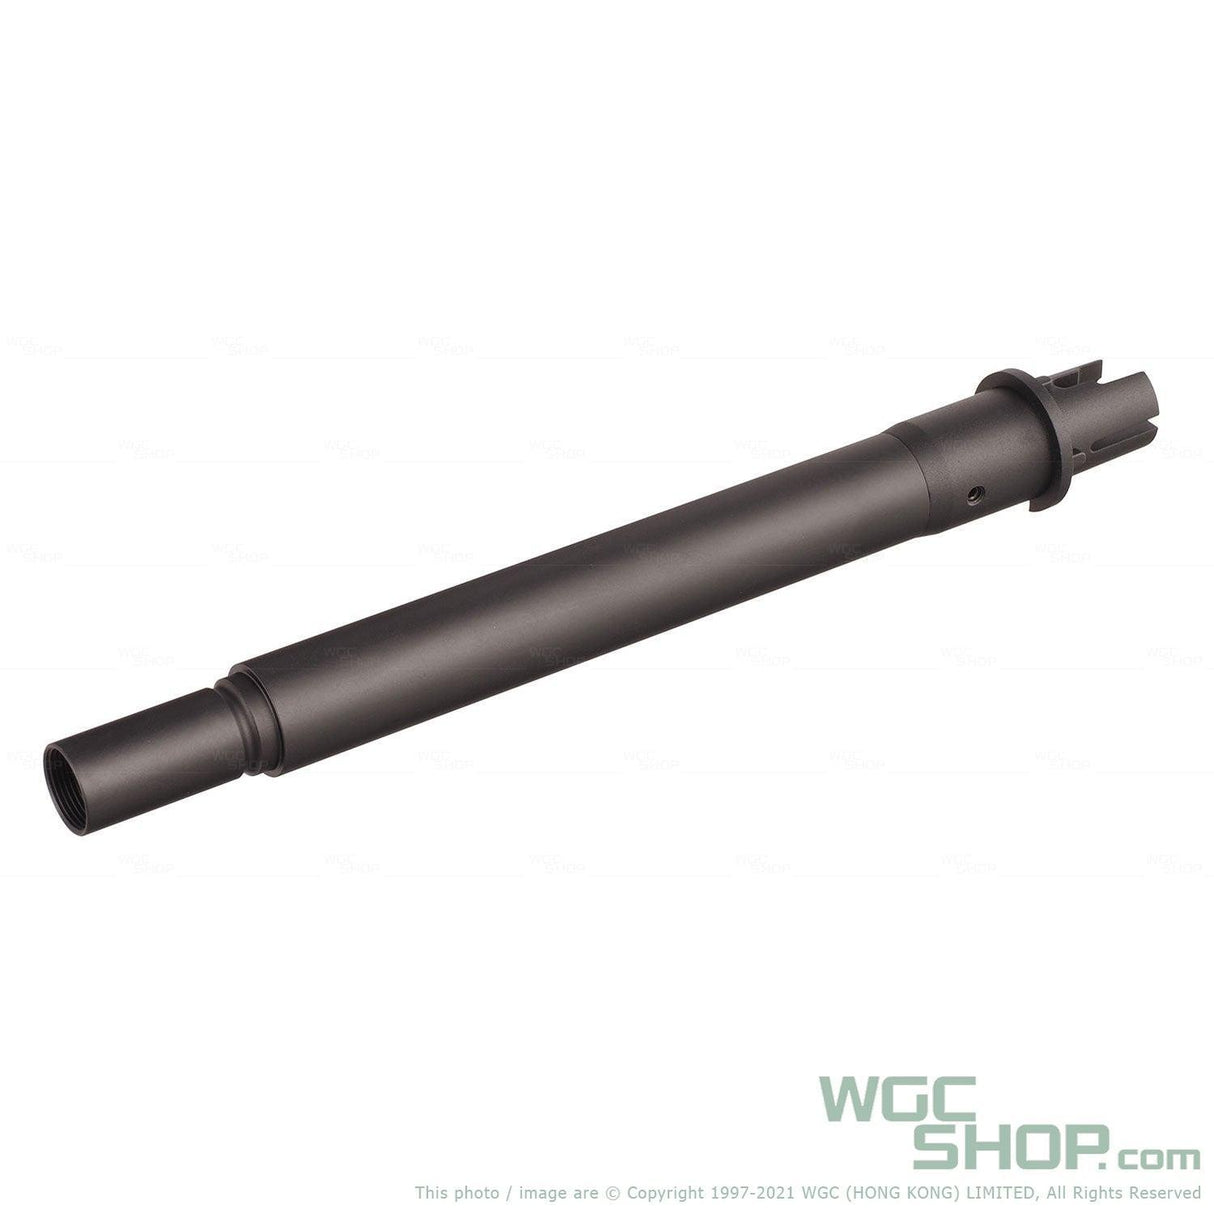 VFC Original Parts - HK416A5 AEG Outer Barrel ( V02CBRL010 ) - WGC Shop